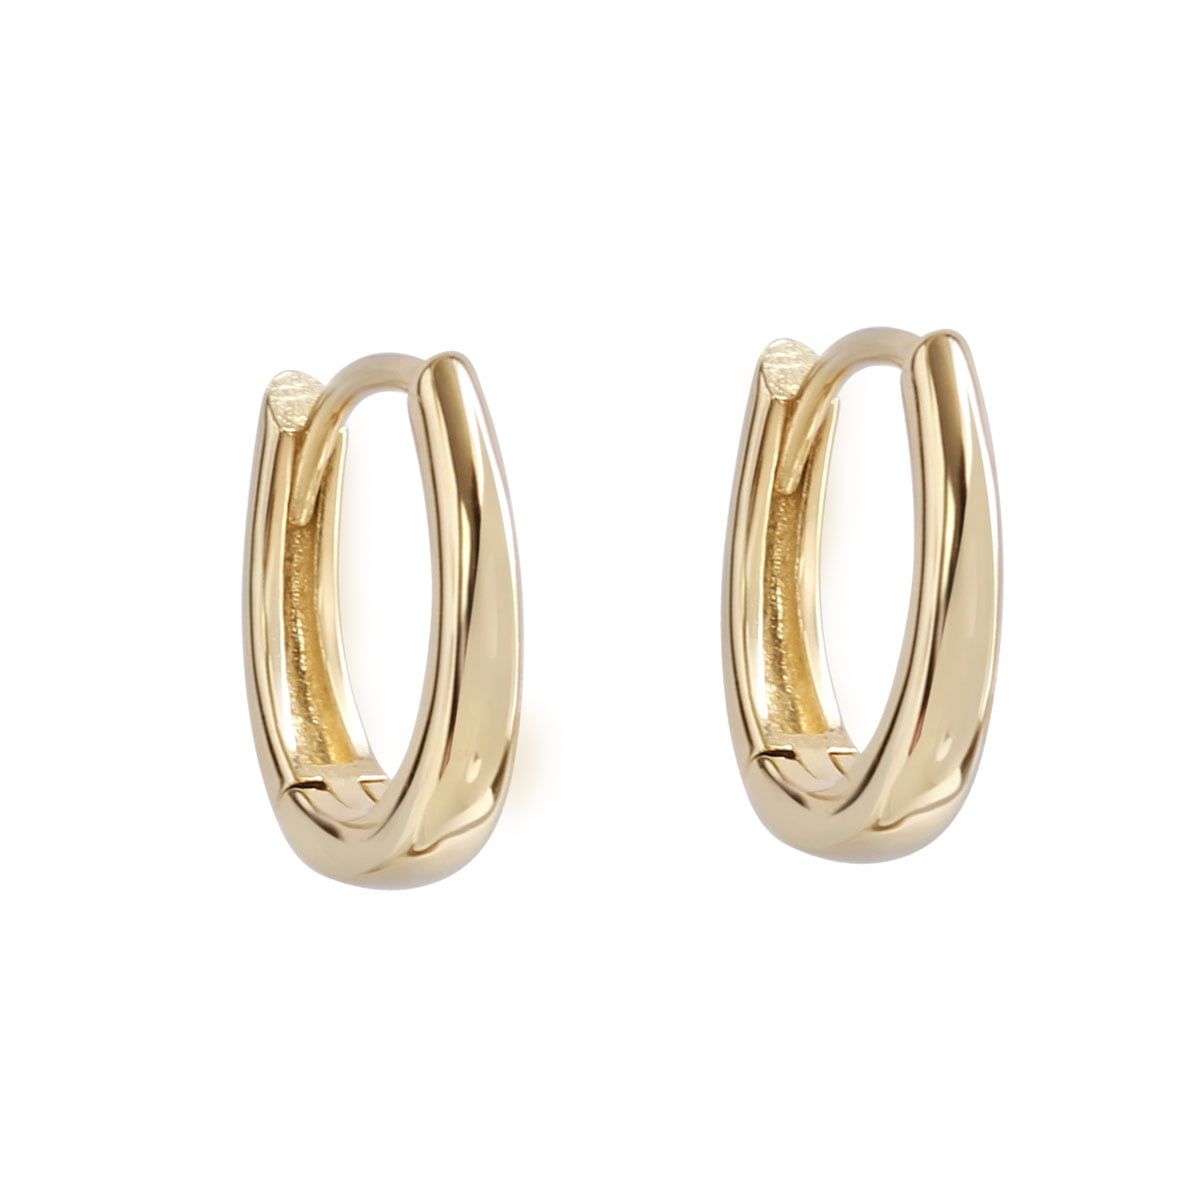 18ct Solid Gold Earrings  Hoops Studs  Drops  Auric Jewellery UK